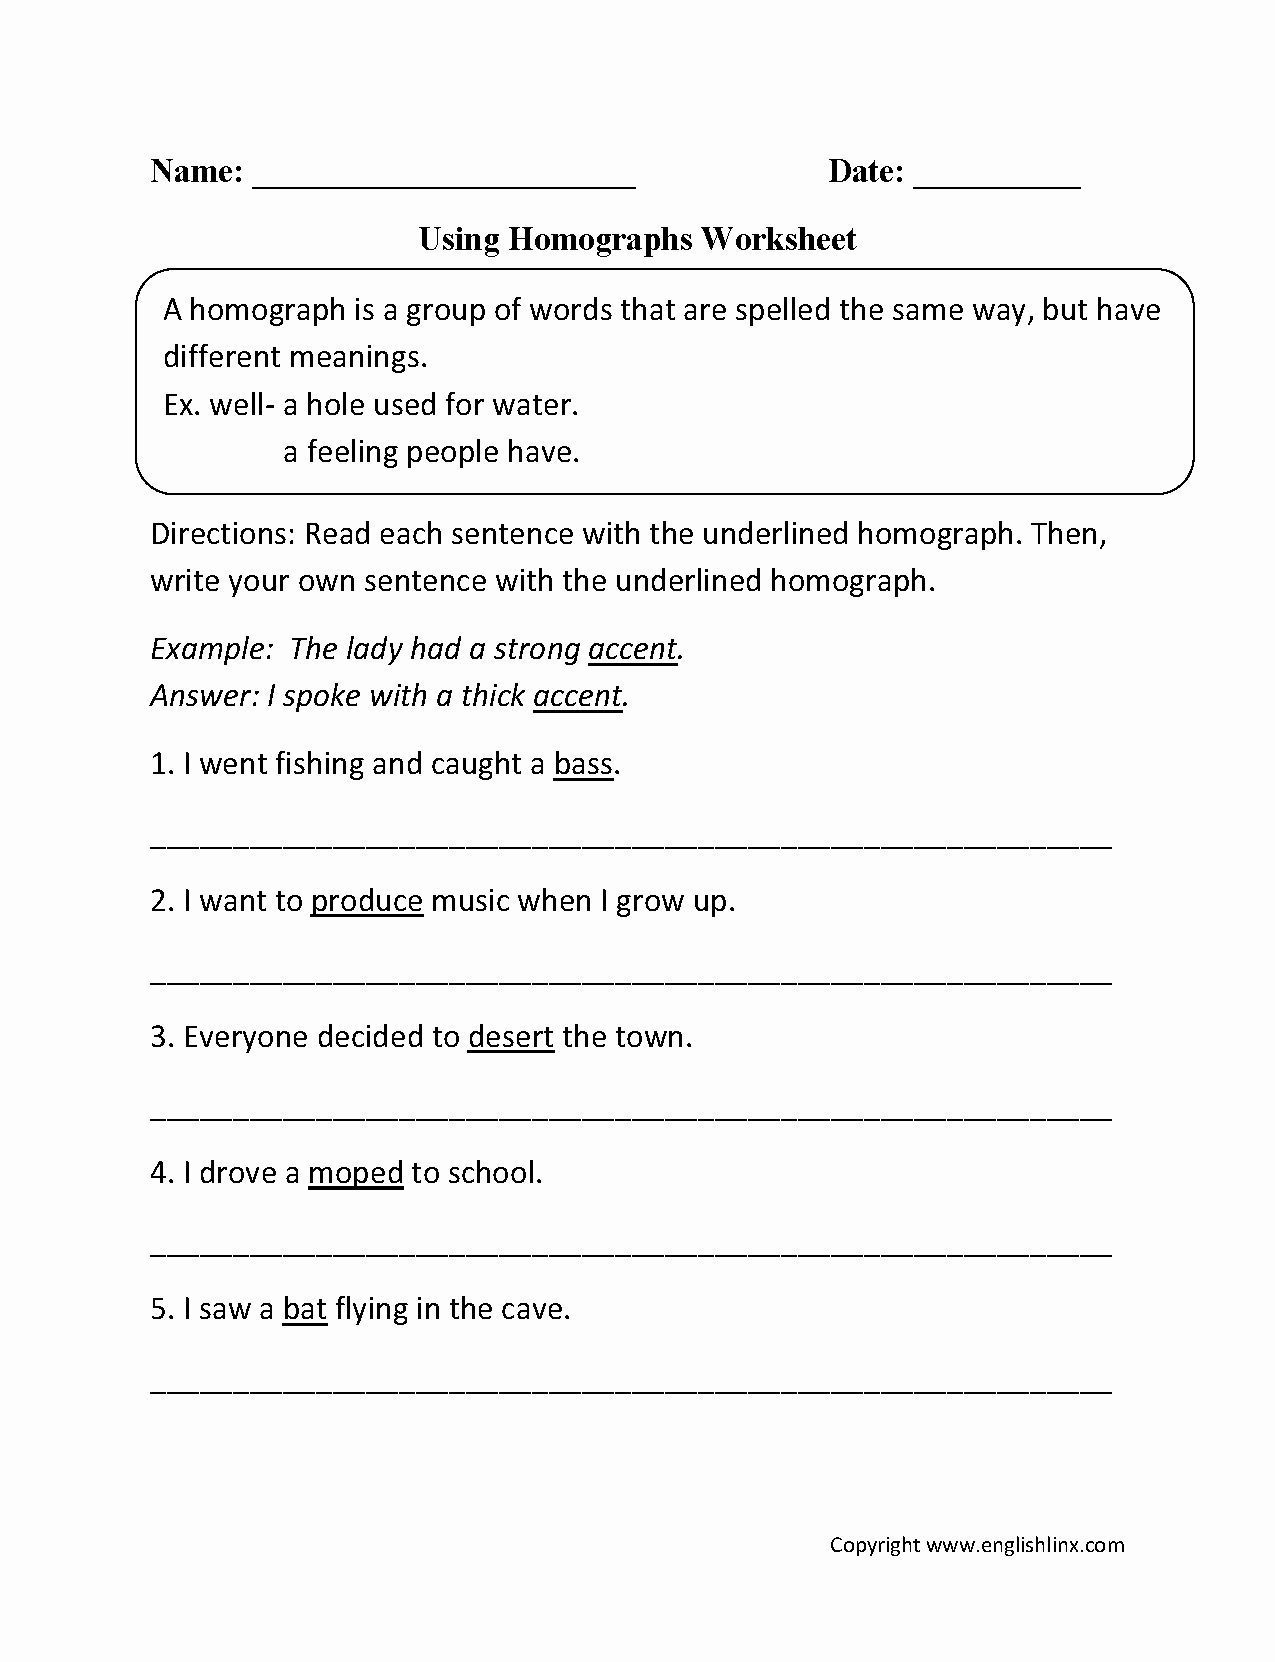 Homograph Worksheets 5th Grade New 20 Homograph Worksheet 5th Grade